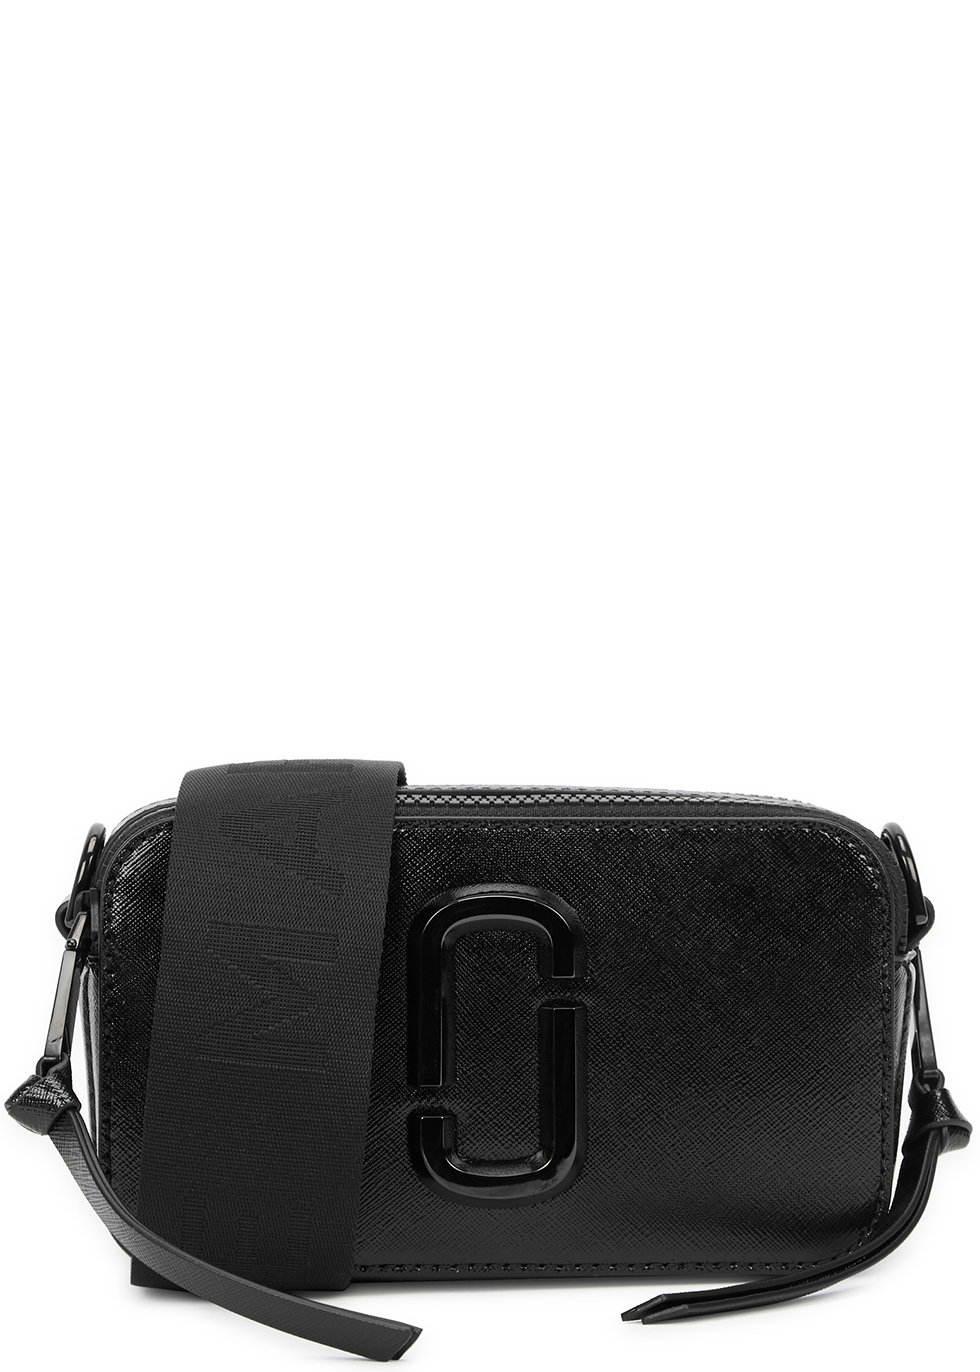 Marc Jacobs The Snapshot DTM black leather cross-body bag